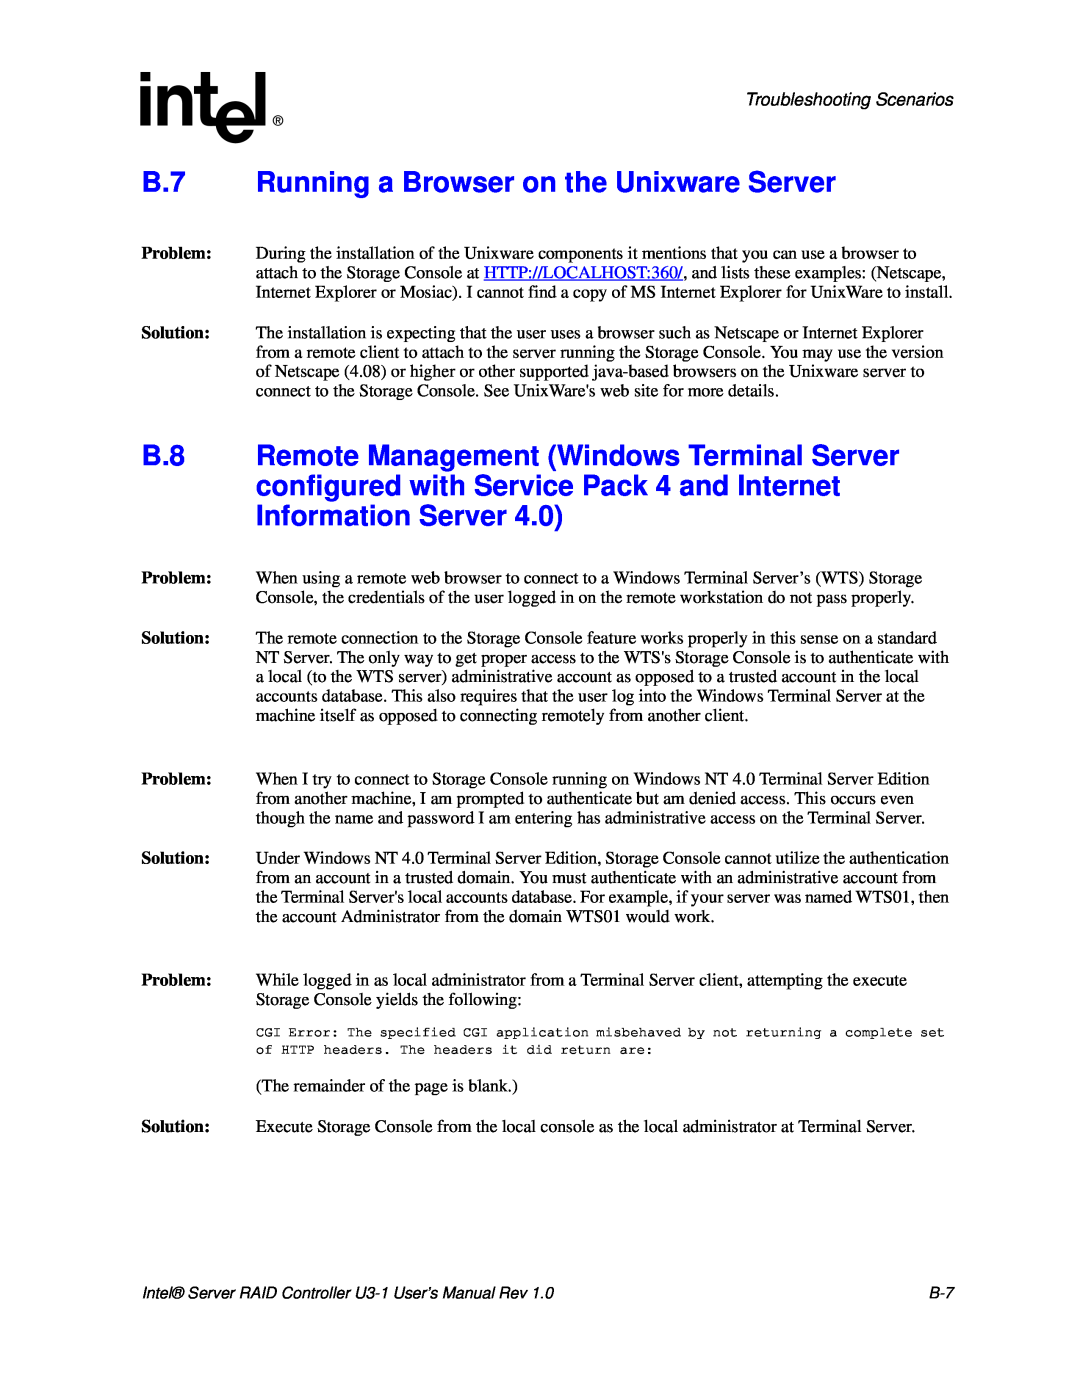 Intel SRCU31 user manual B.7 Running a Browser on the Unixware Server, Troubleshooting Scenarios 